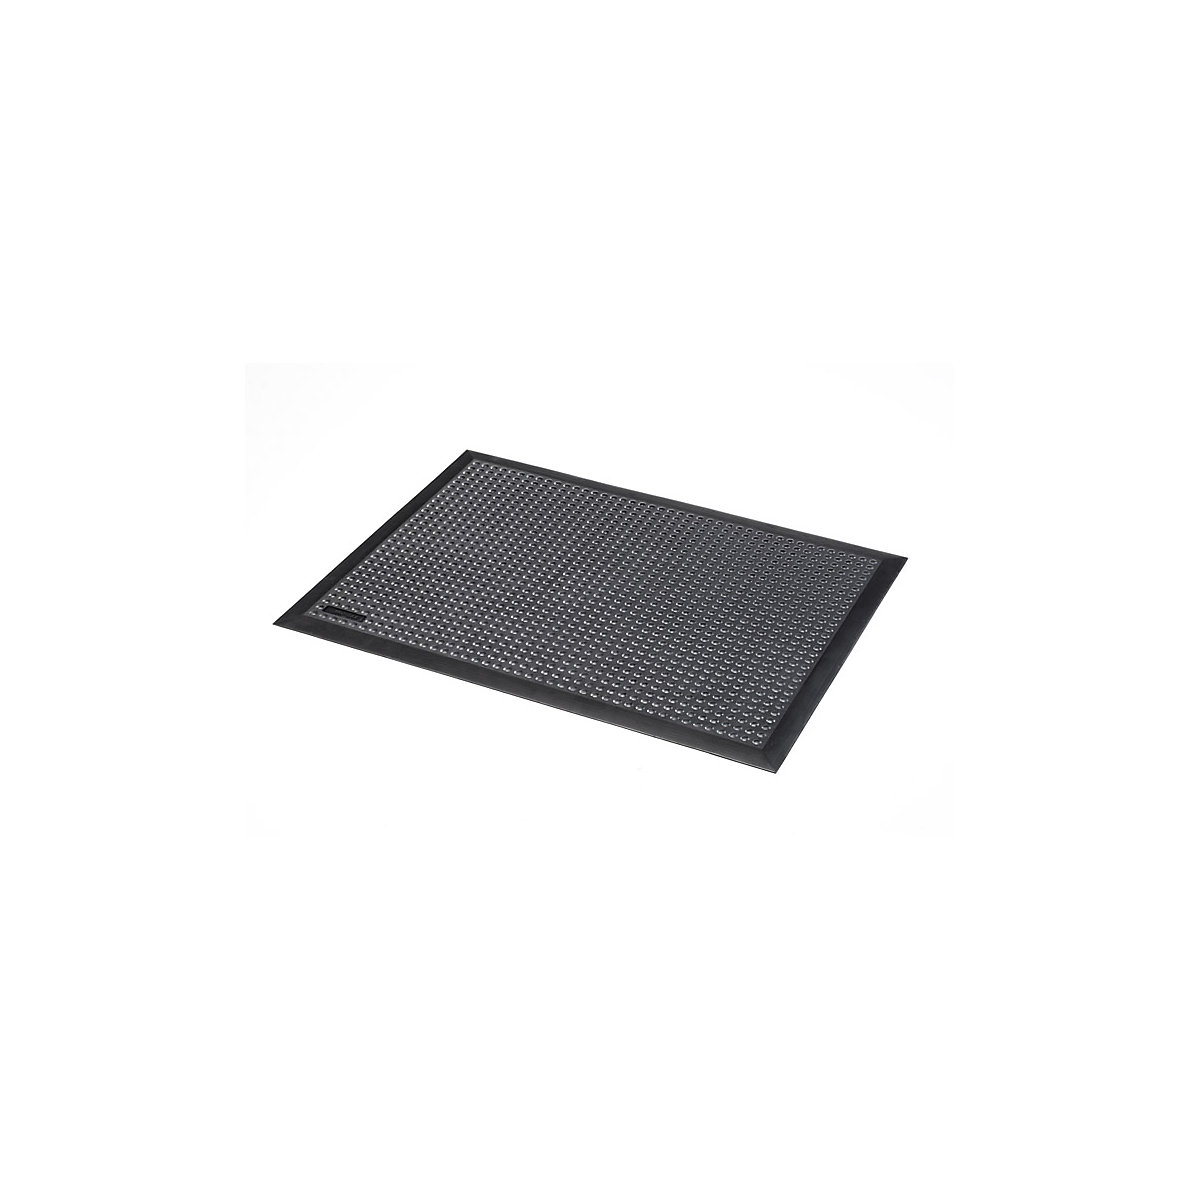 Skystep nitrile rubber workstation matting – NOTRAX, black, LxWxH 1500 x 900 x 13 mm-4